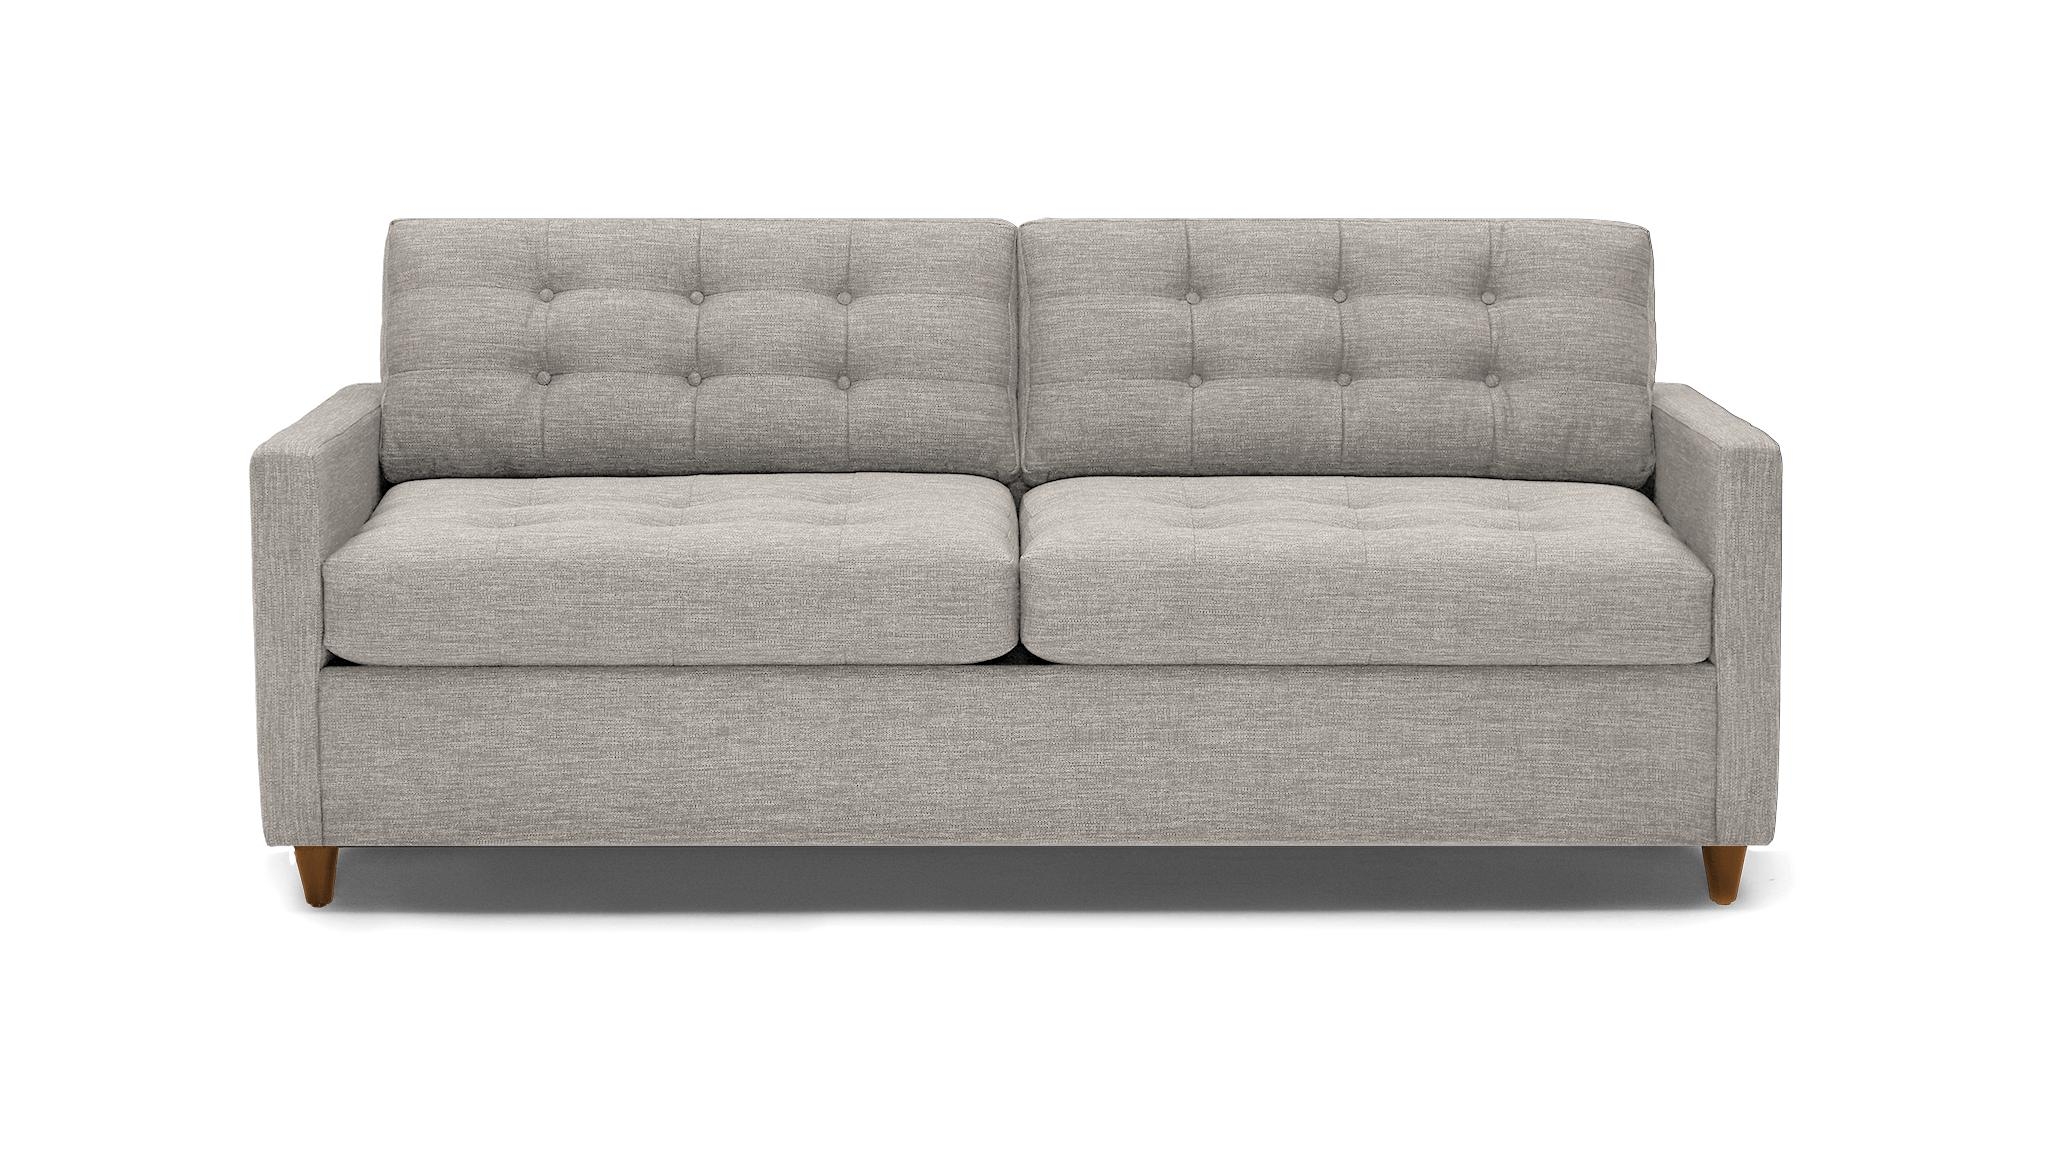 Beige/White Eliot Mid Century Modern Sleeper Sofa - Prime Stone - Mocha - Foam - Image 0